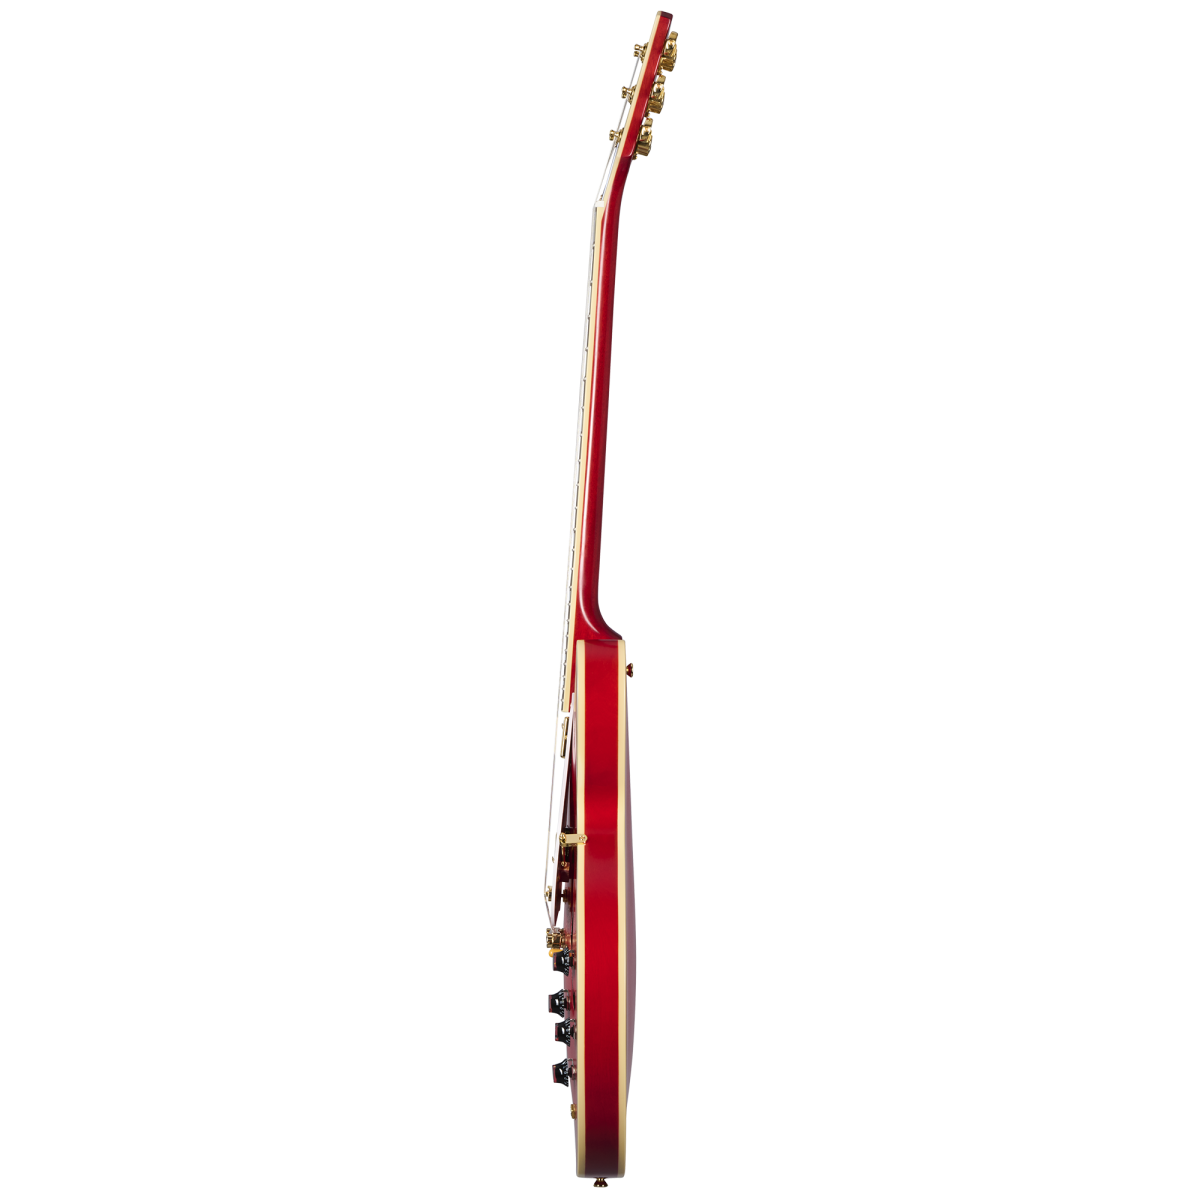 1959 ES-355, Cherry Red | Epiphone